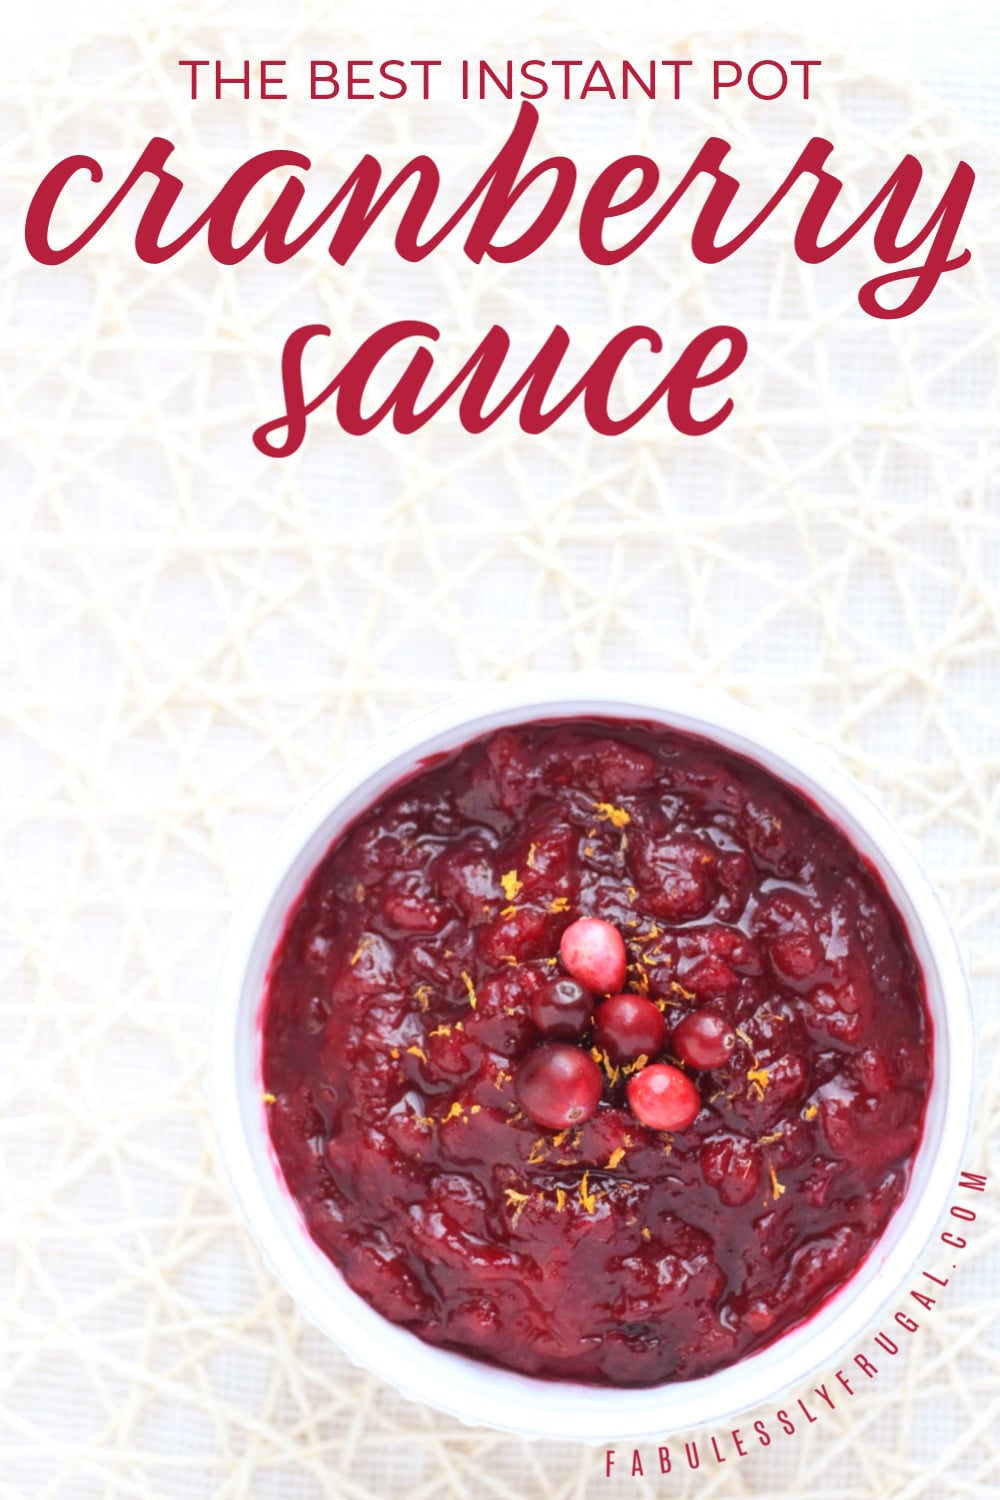 The best instant pot cranberry sauce recipe